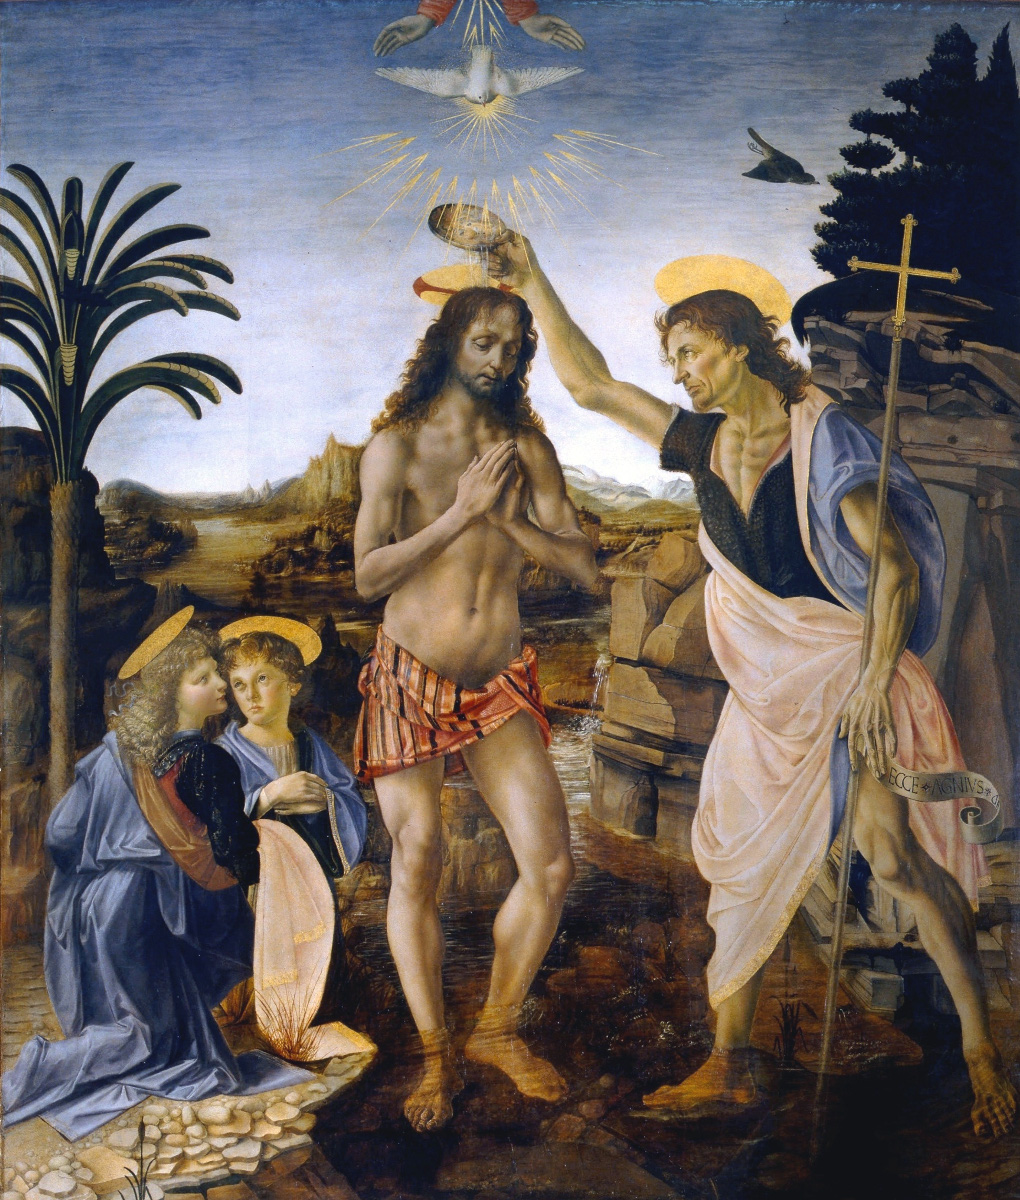 the Baptism of Christ by Leonardo da Vinci